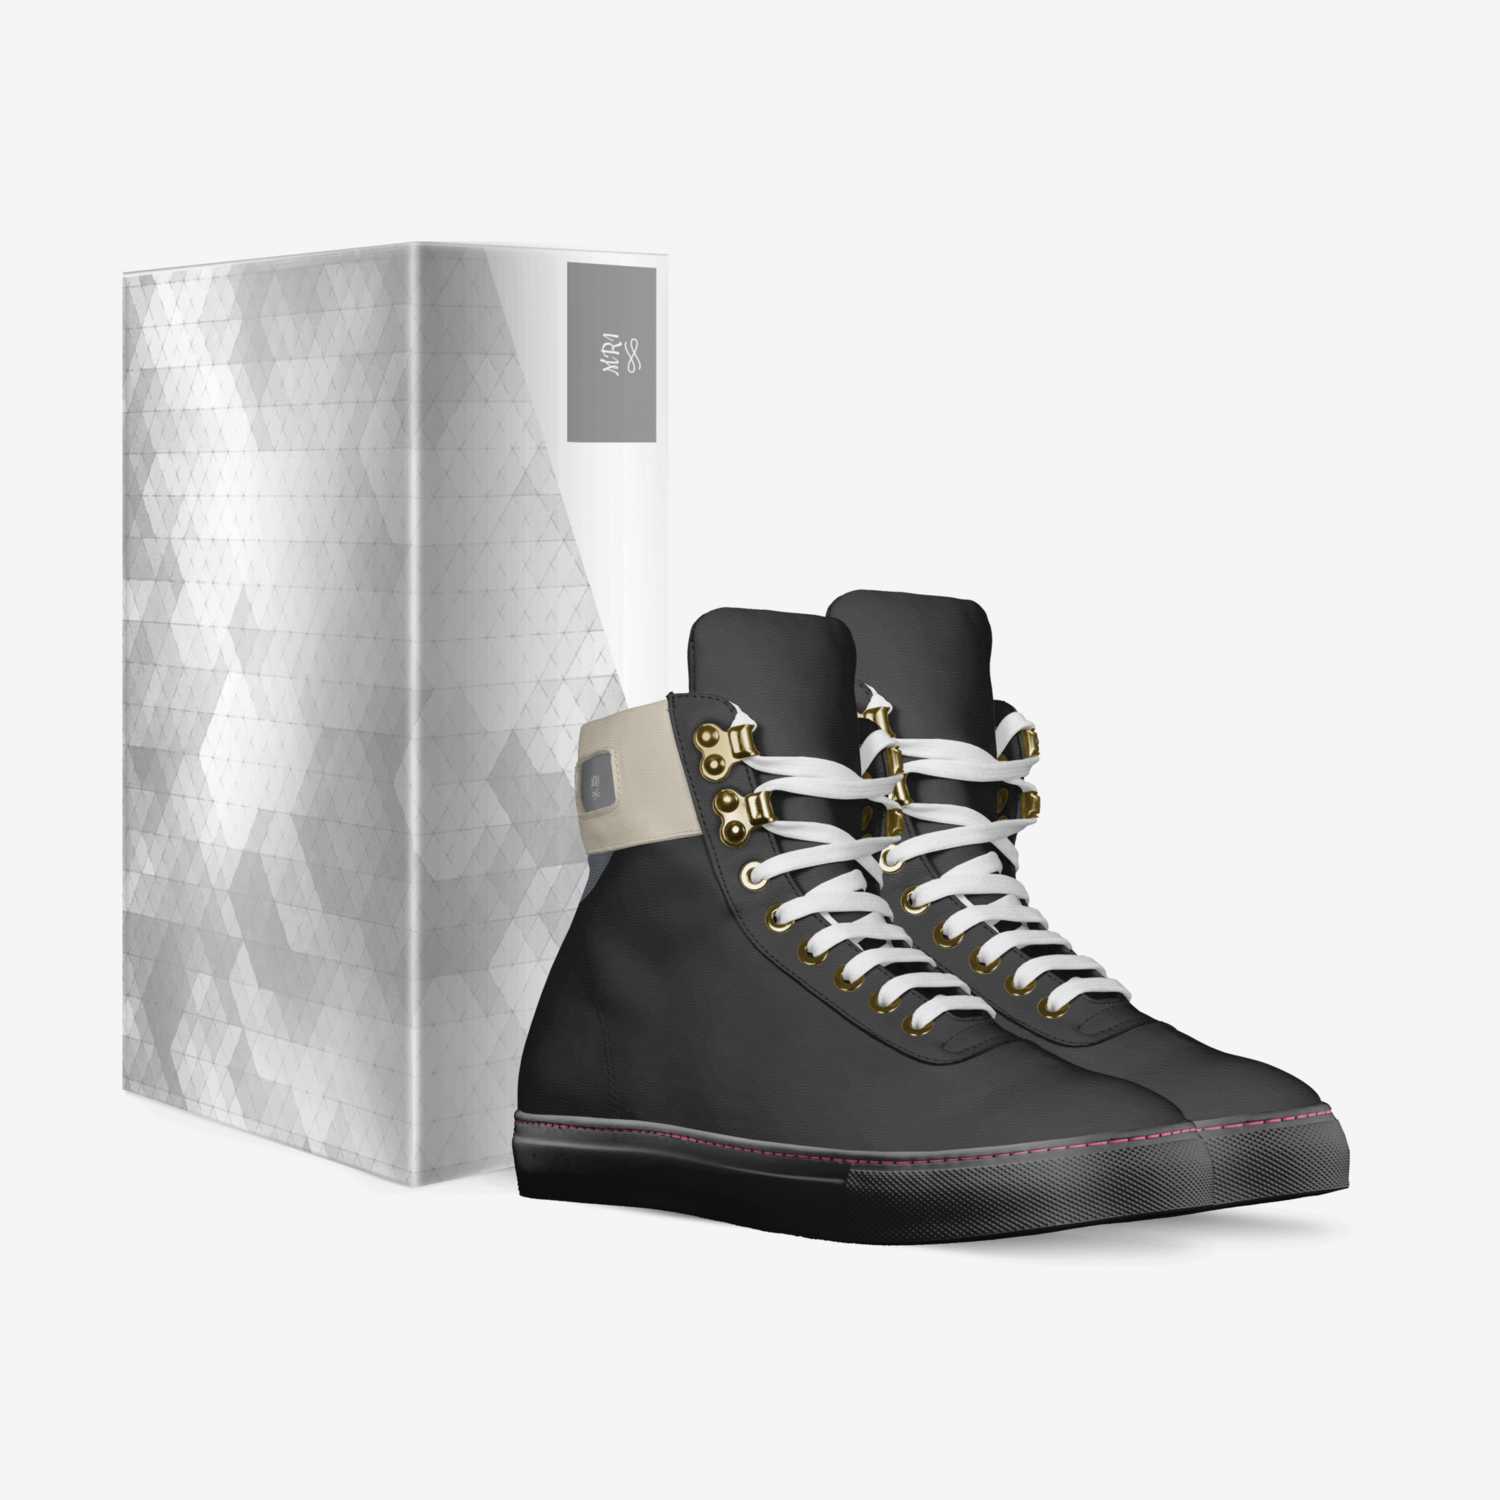 MR1 custom made in Italy shoes by Dario Romero | Box view